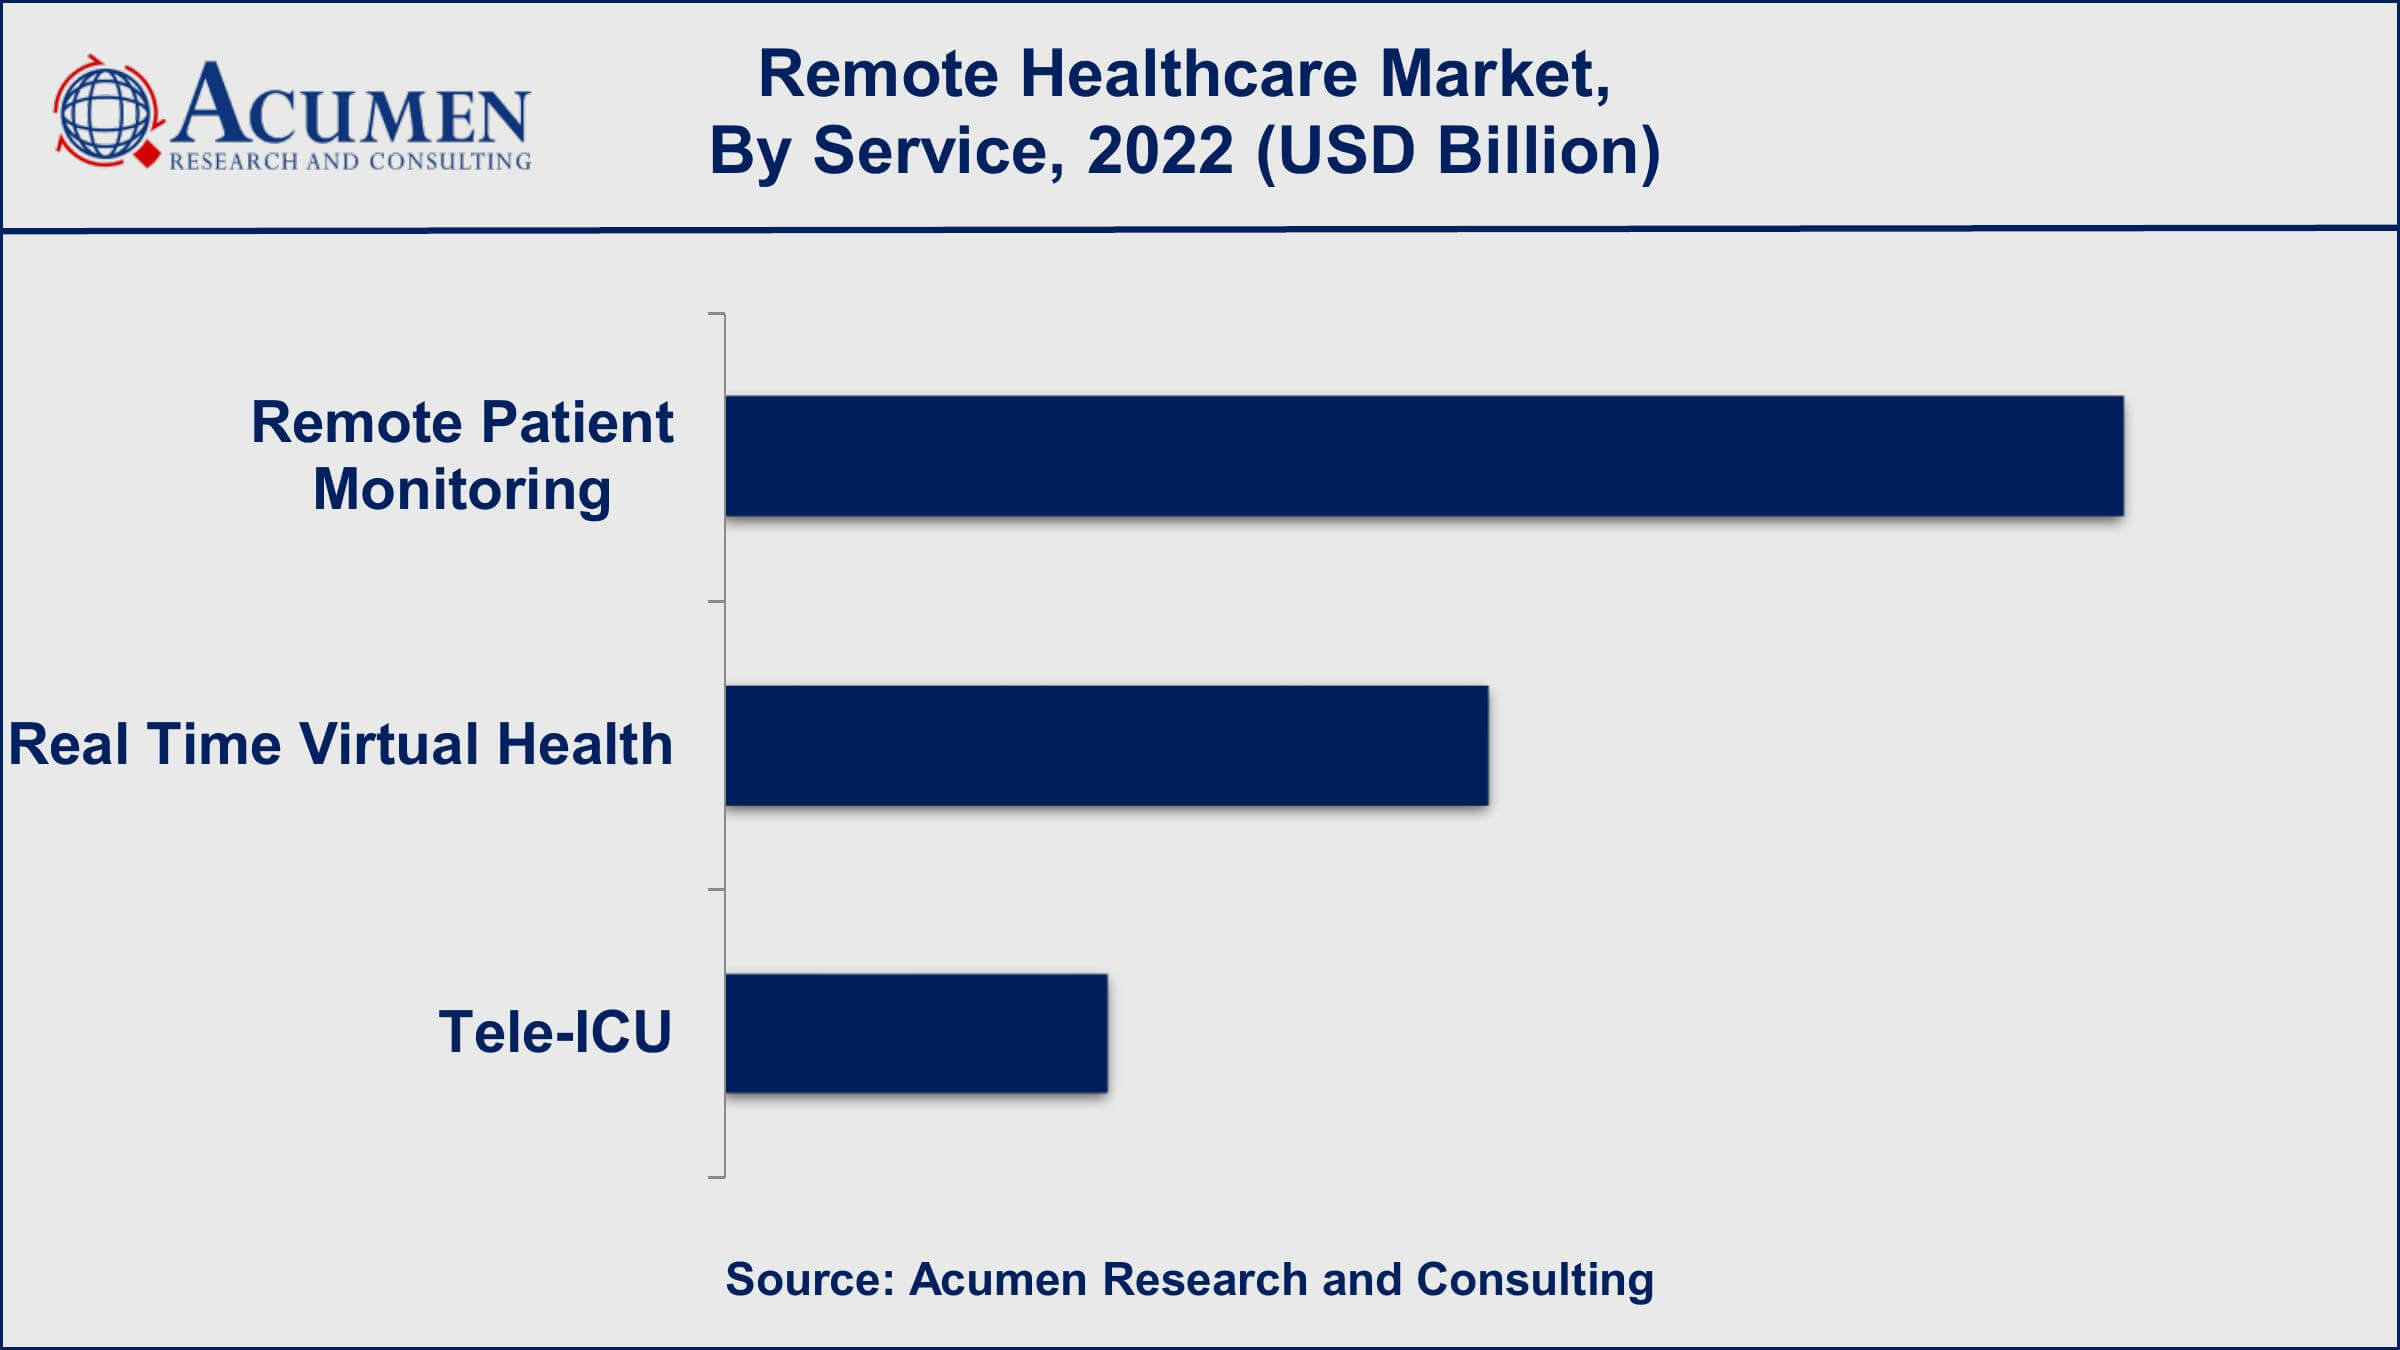 Remote Healthcare Market Insights